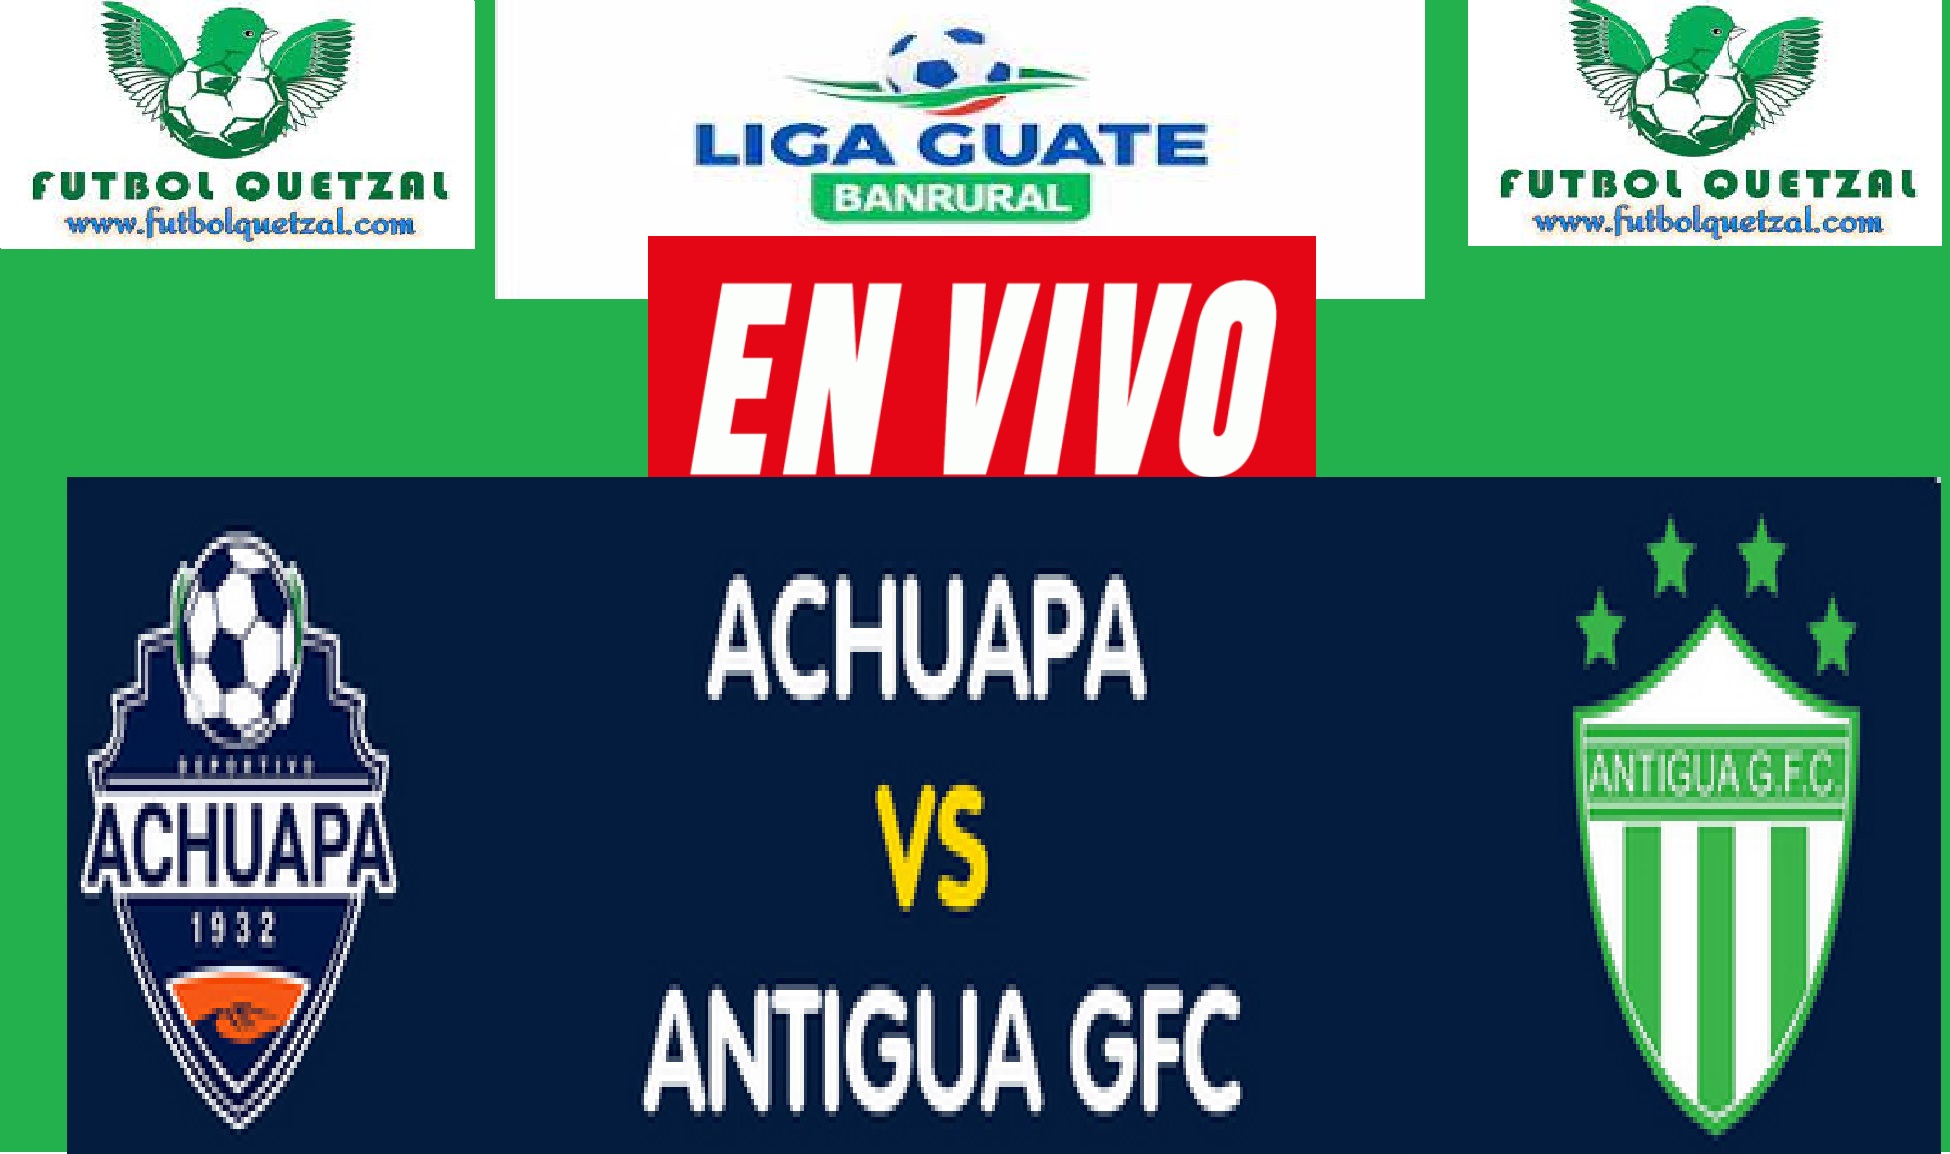 Antigua GFC vs Achuapa EN VIVO Liga Guate Banrural 